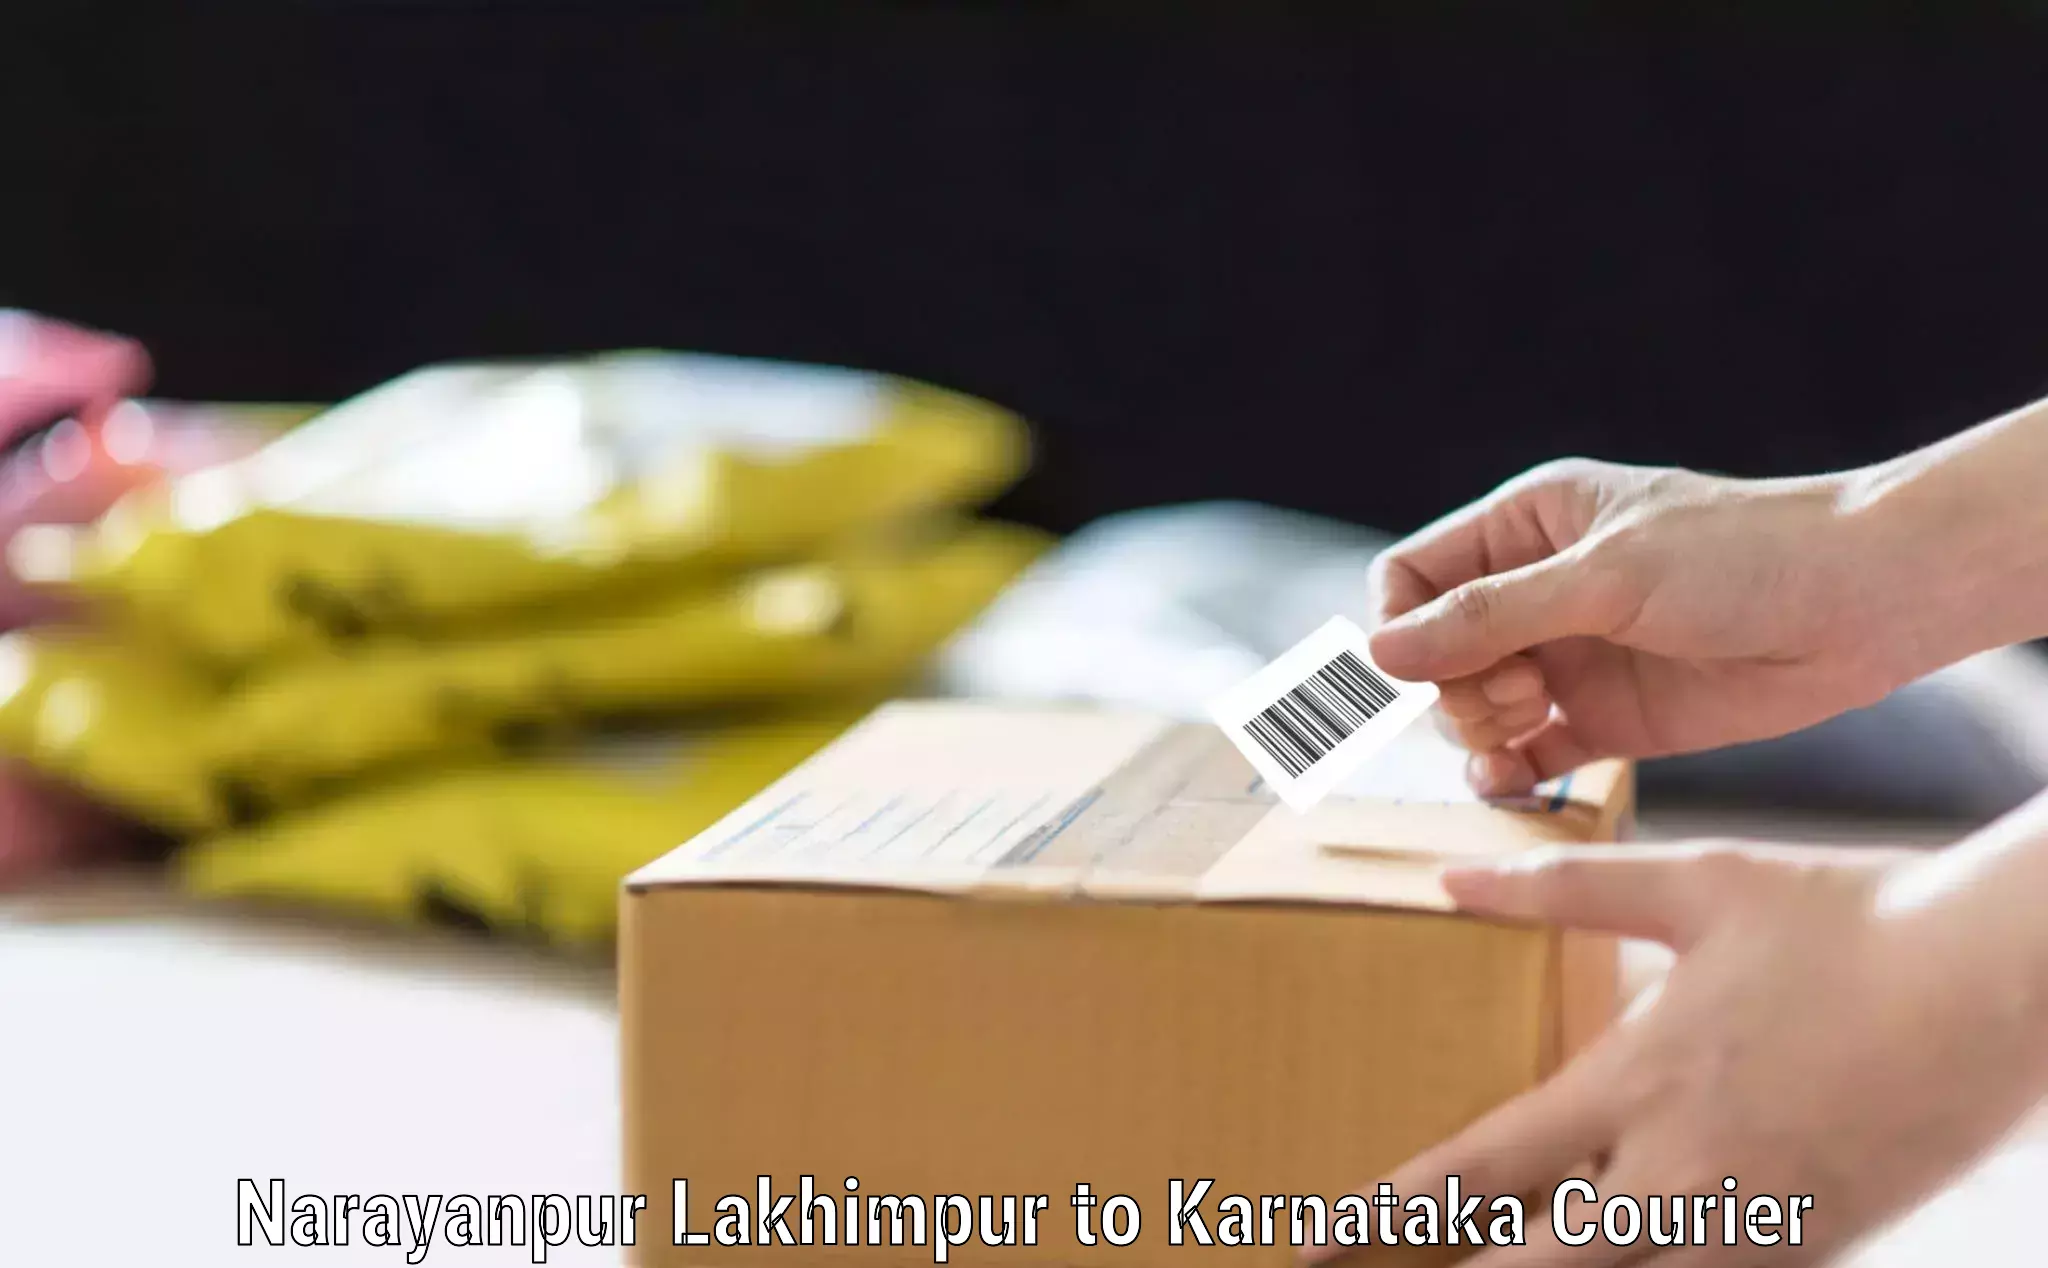 Luggage shipment specialists Narayanpur Lakhimpur to Kolar